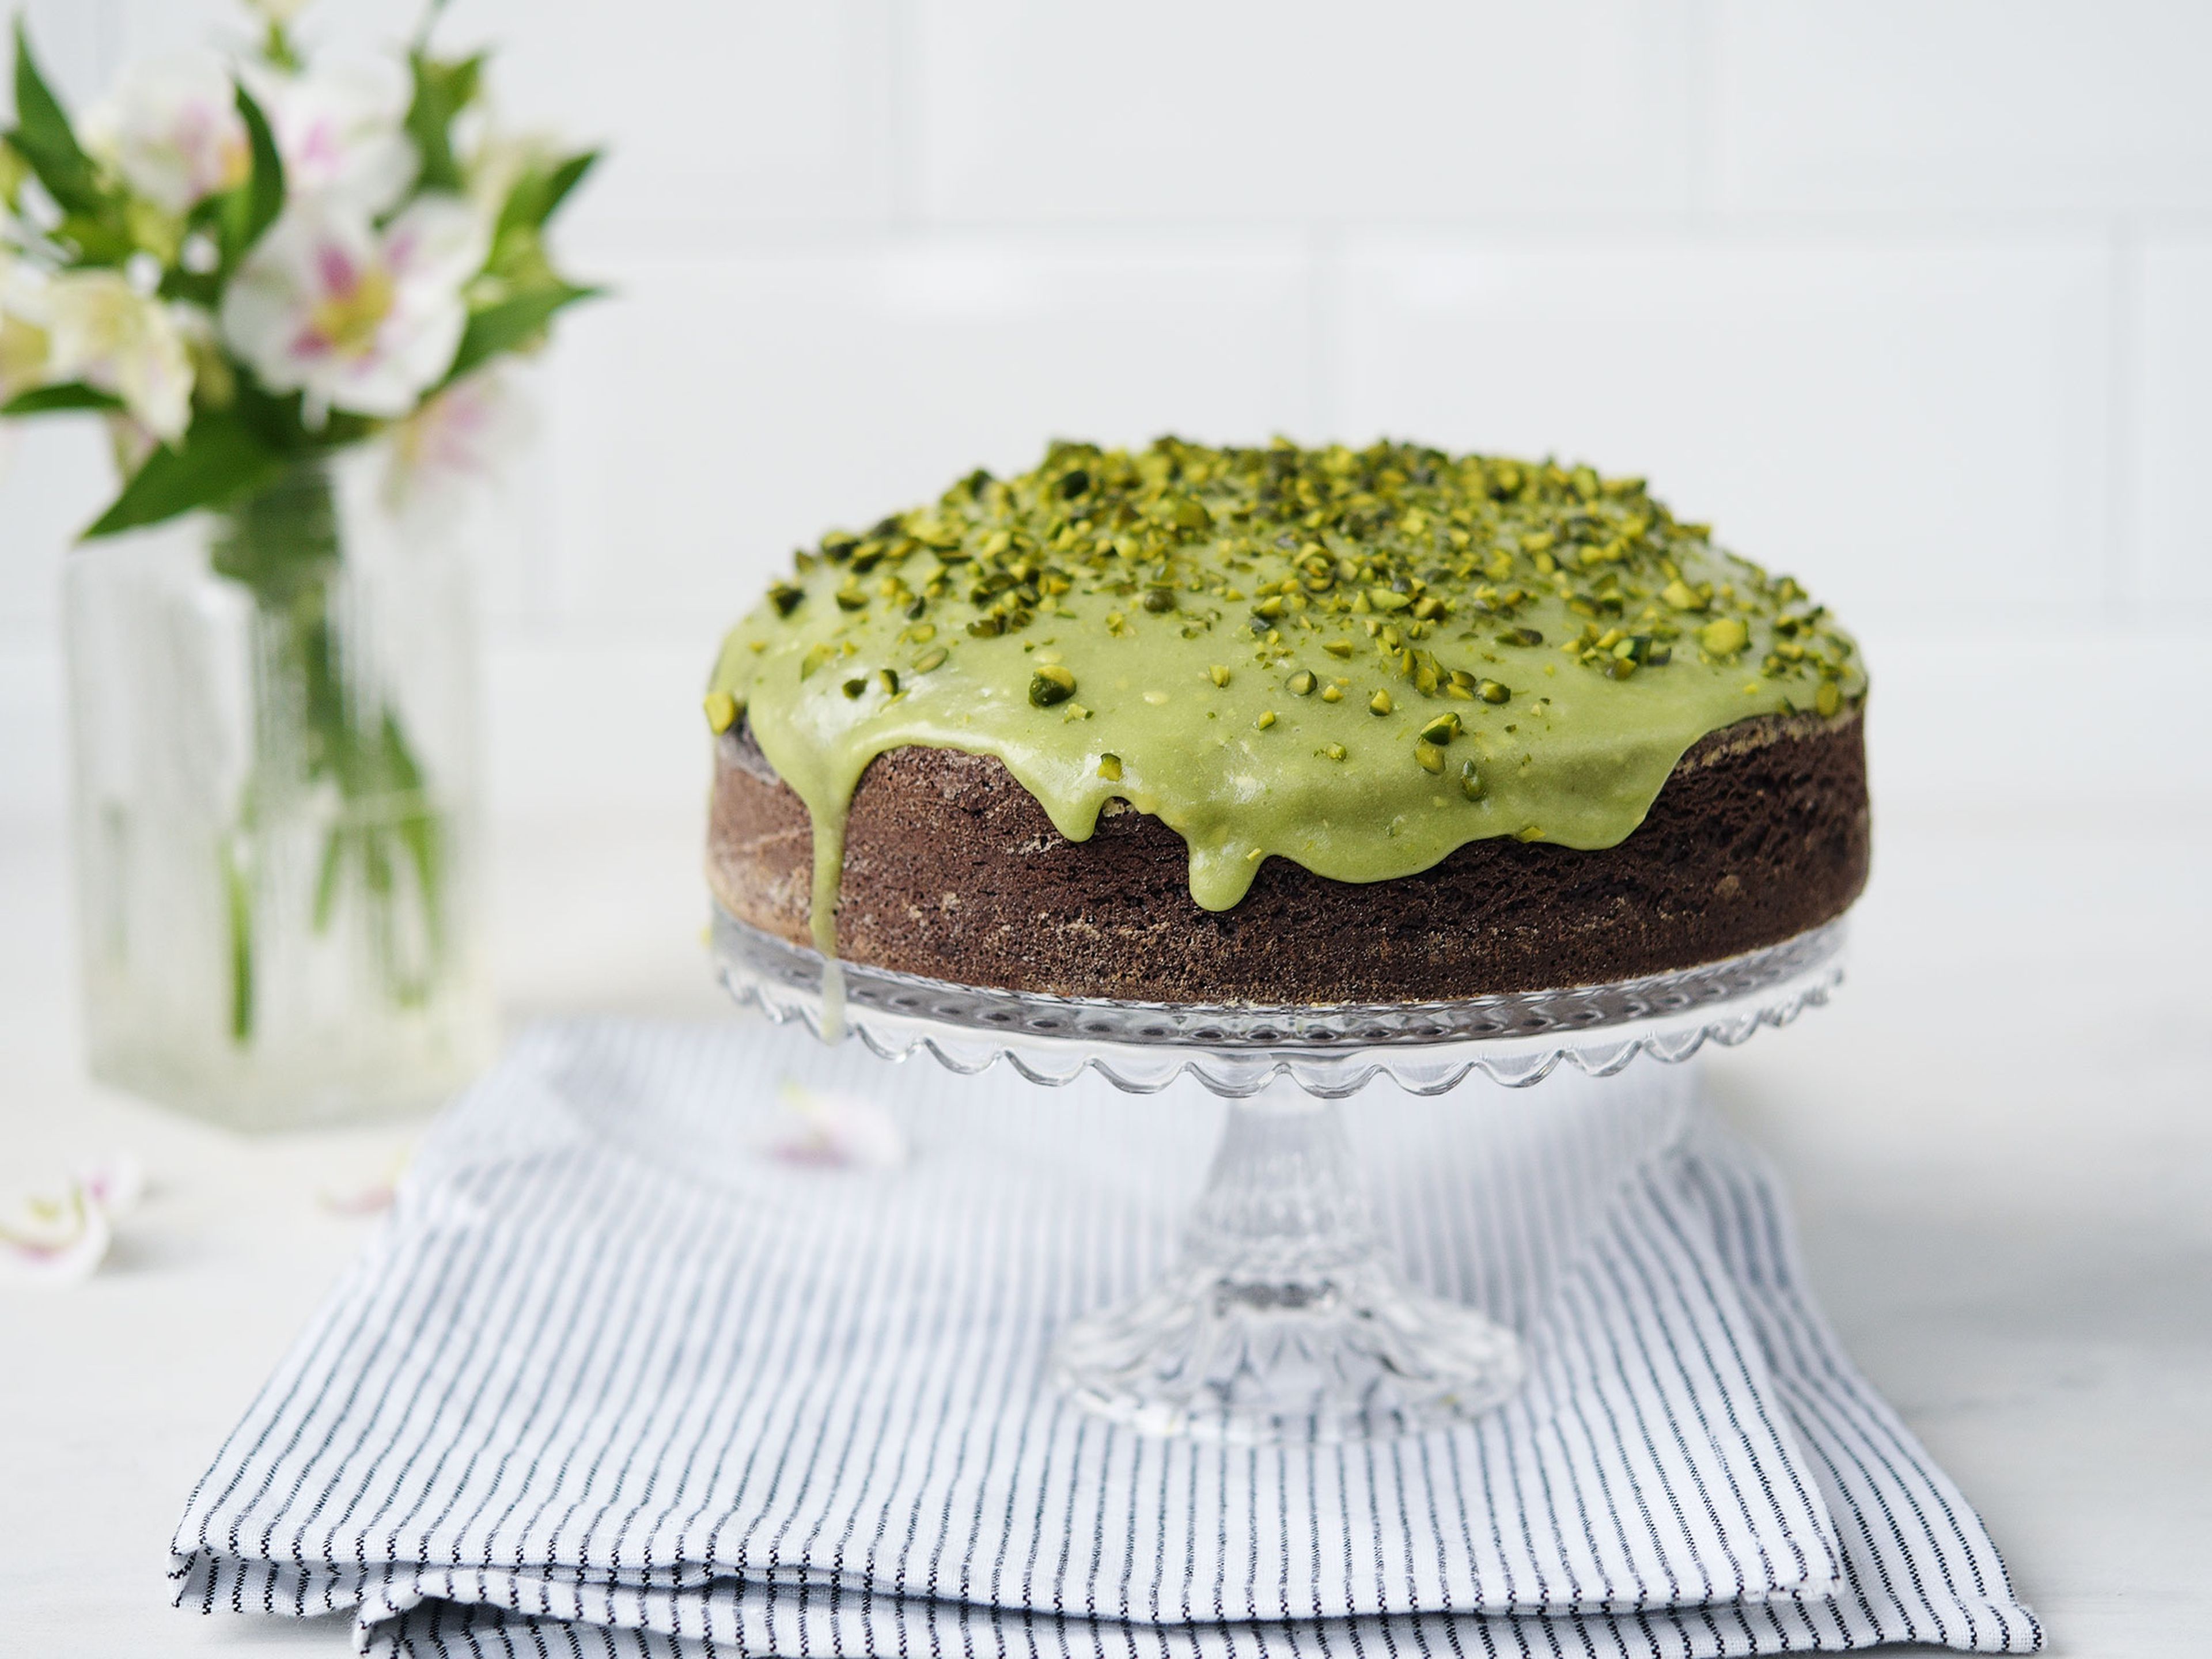 Chocolate cake with avocado and pistachios